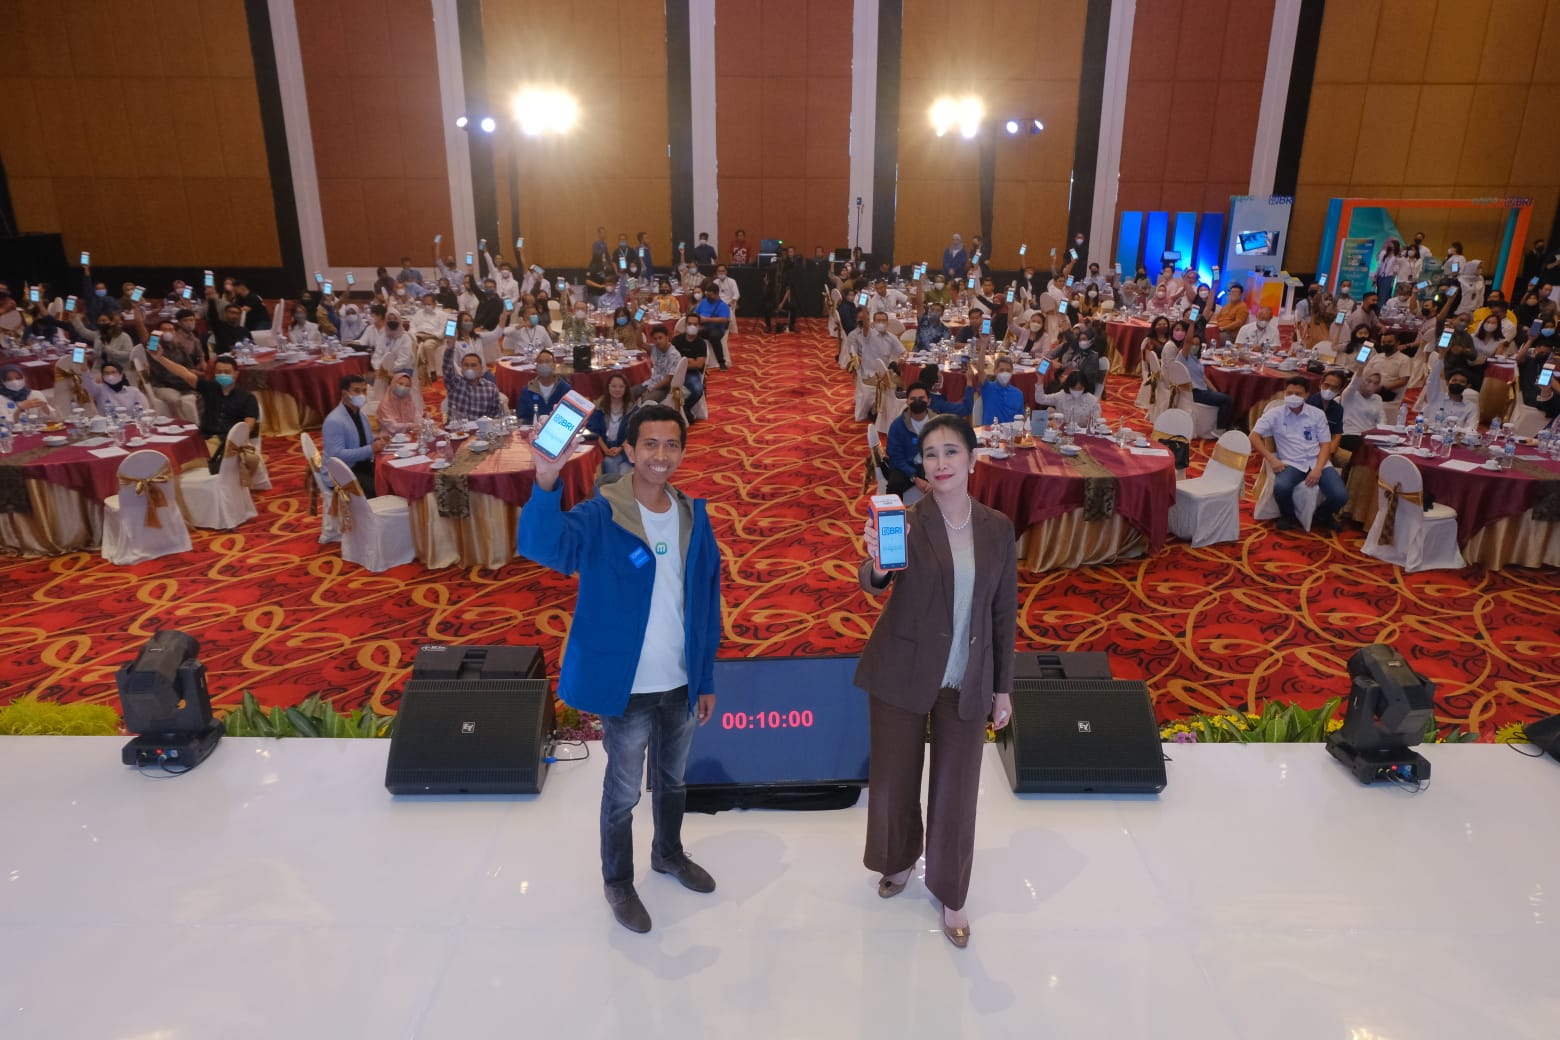 BRI Kolaborasi dengan Majoo Berikan Solusi Digital untuk Merchant di Indonesia